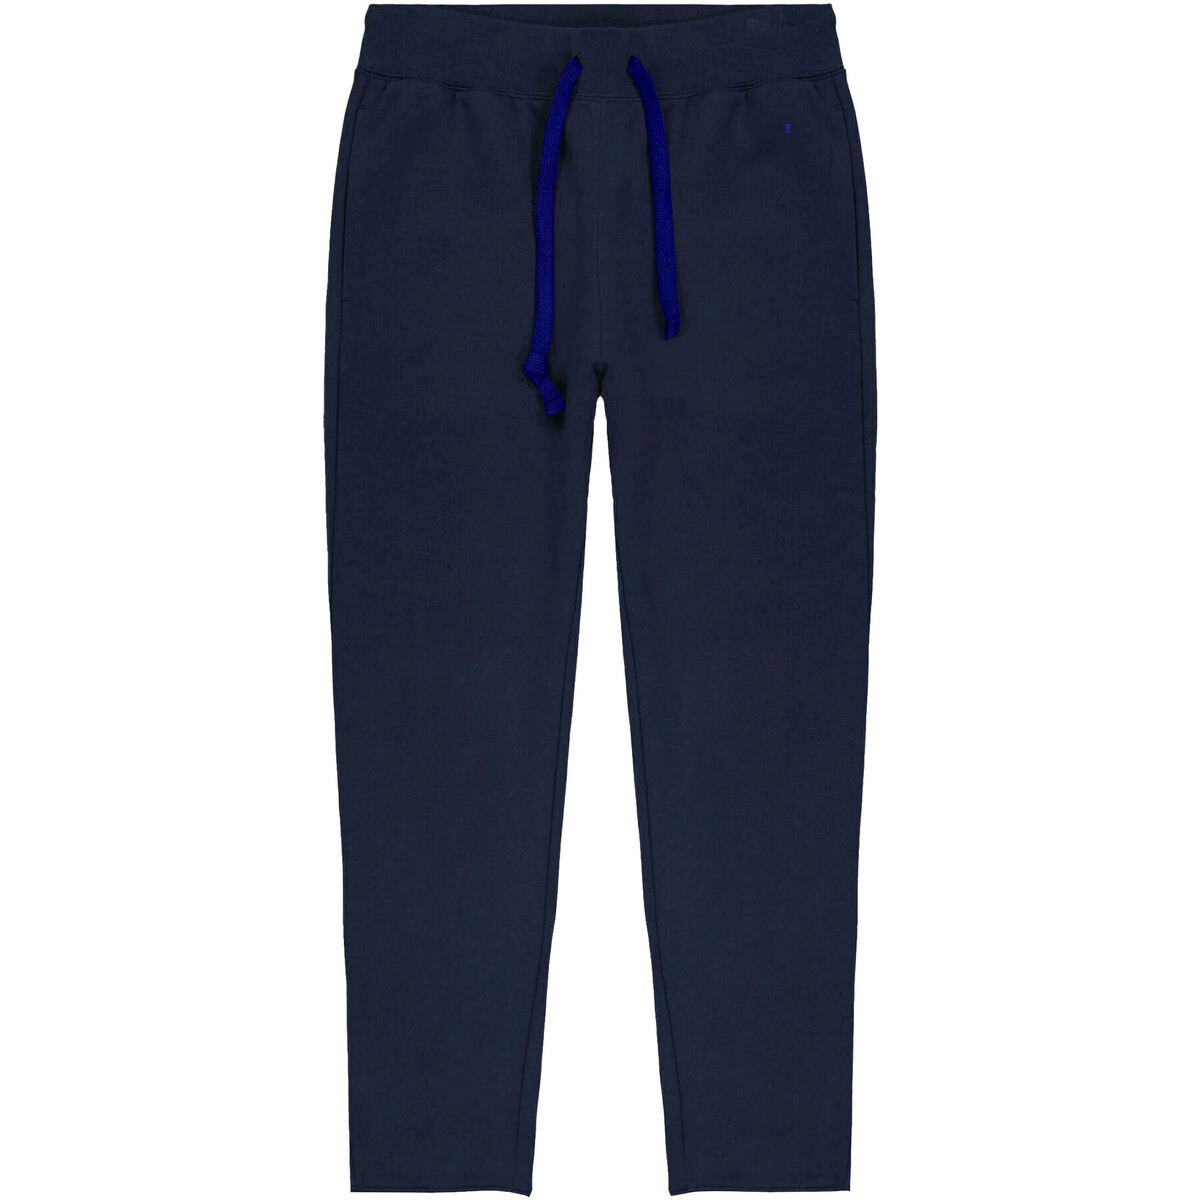 textil Mujer Pantalones de chándal Champion 108265 Azul